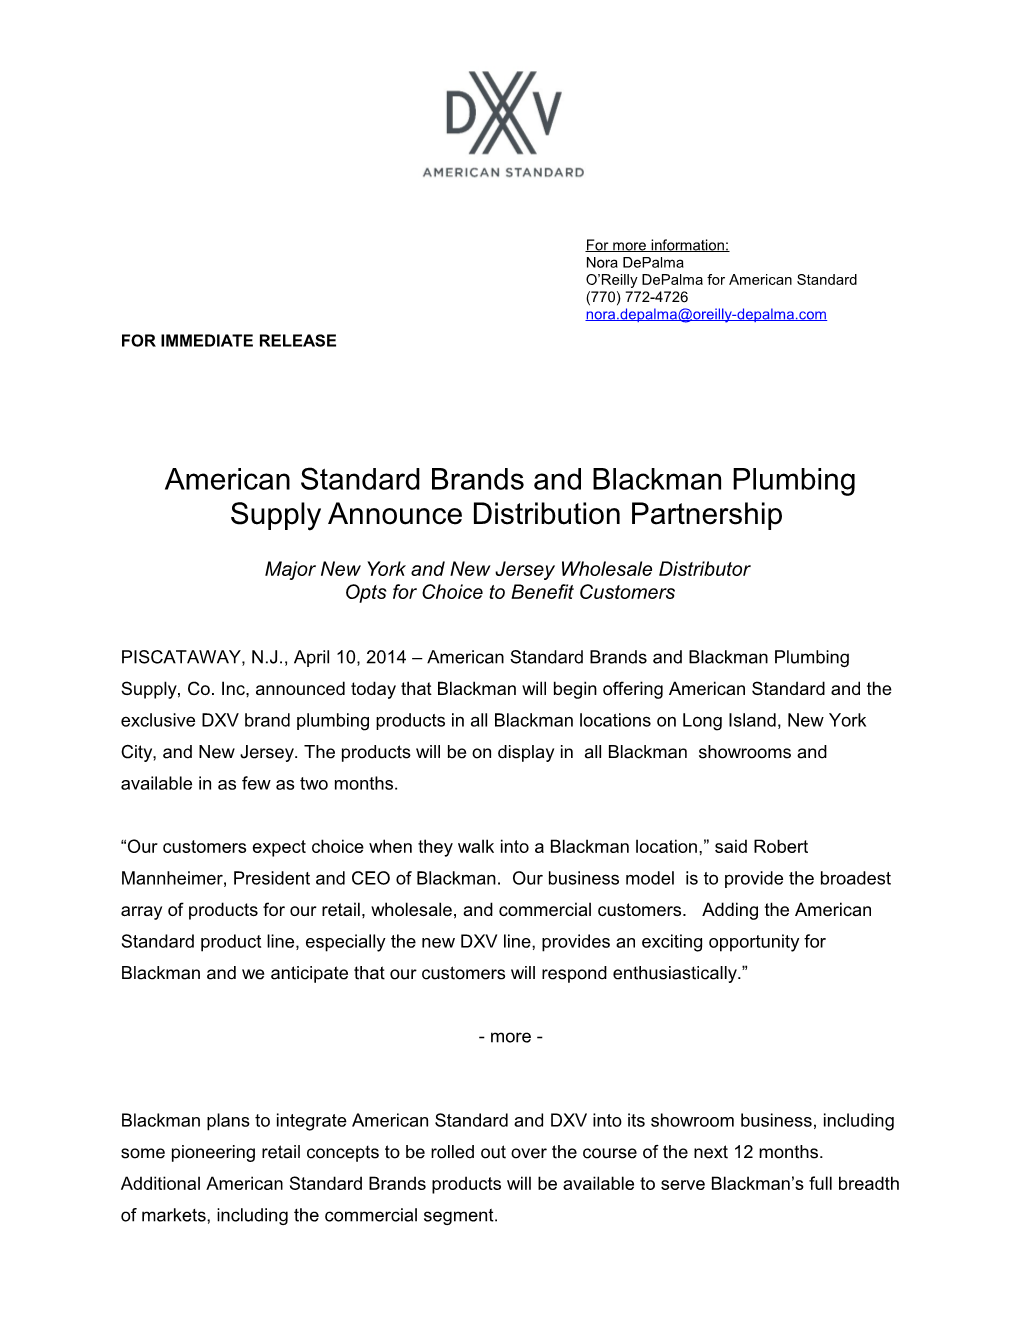 American Standard Brands and Blackman Plumbing Supply Announce Distribution Partnership